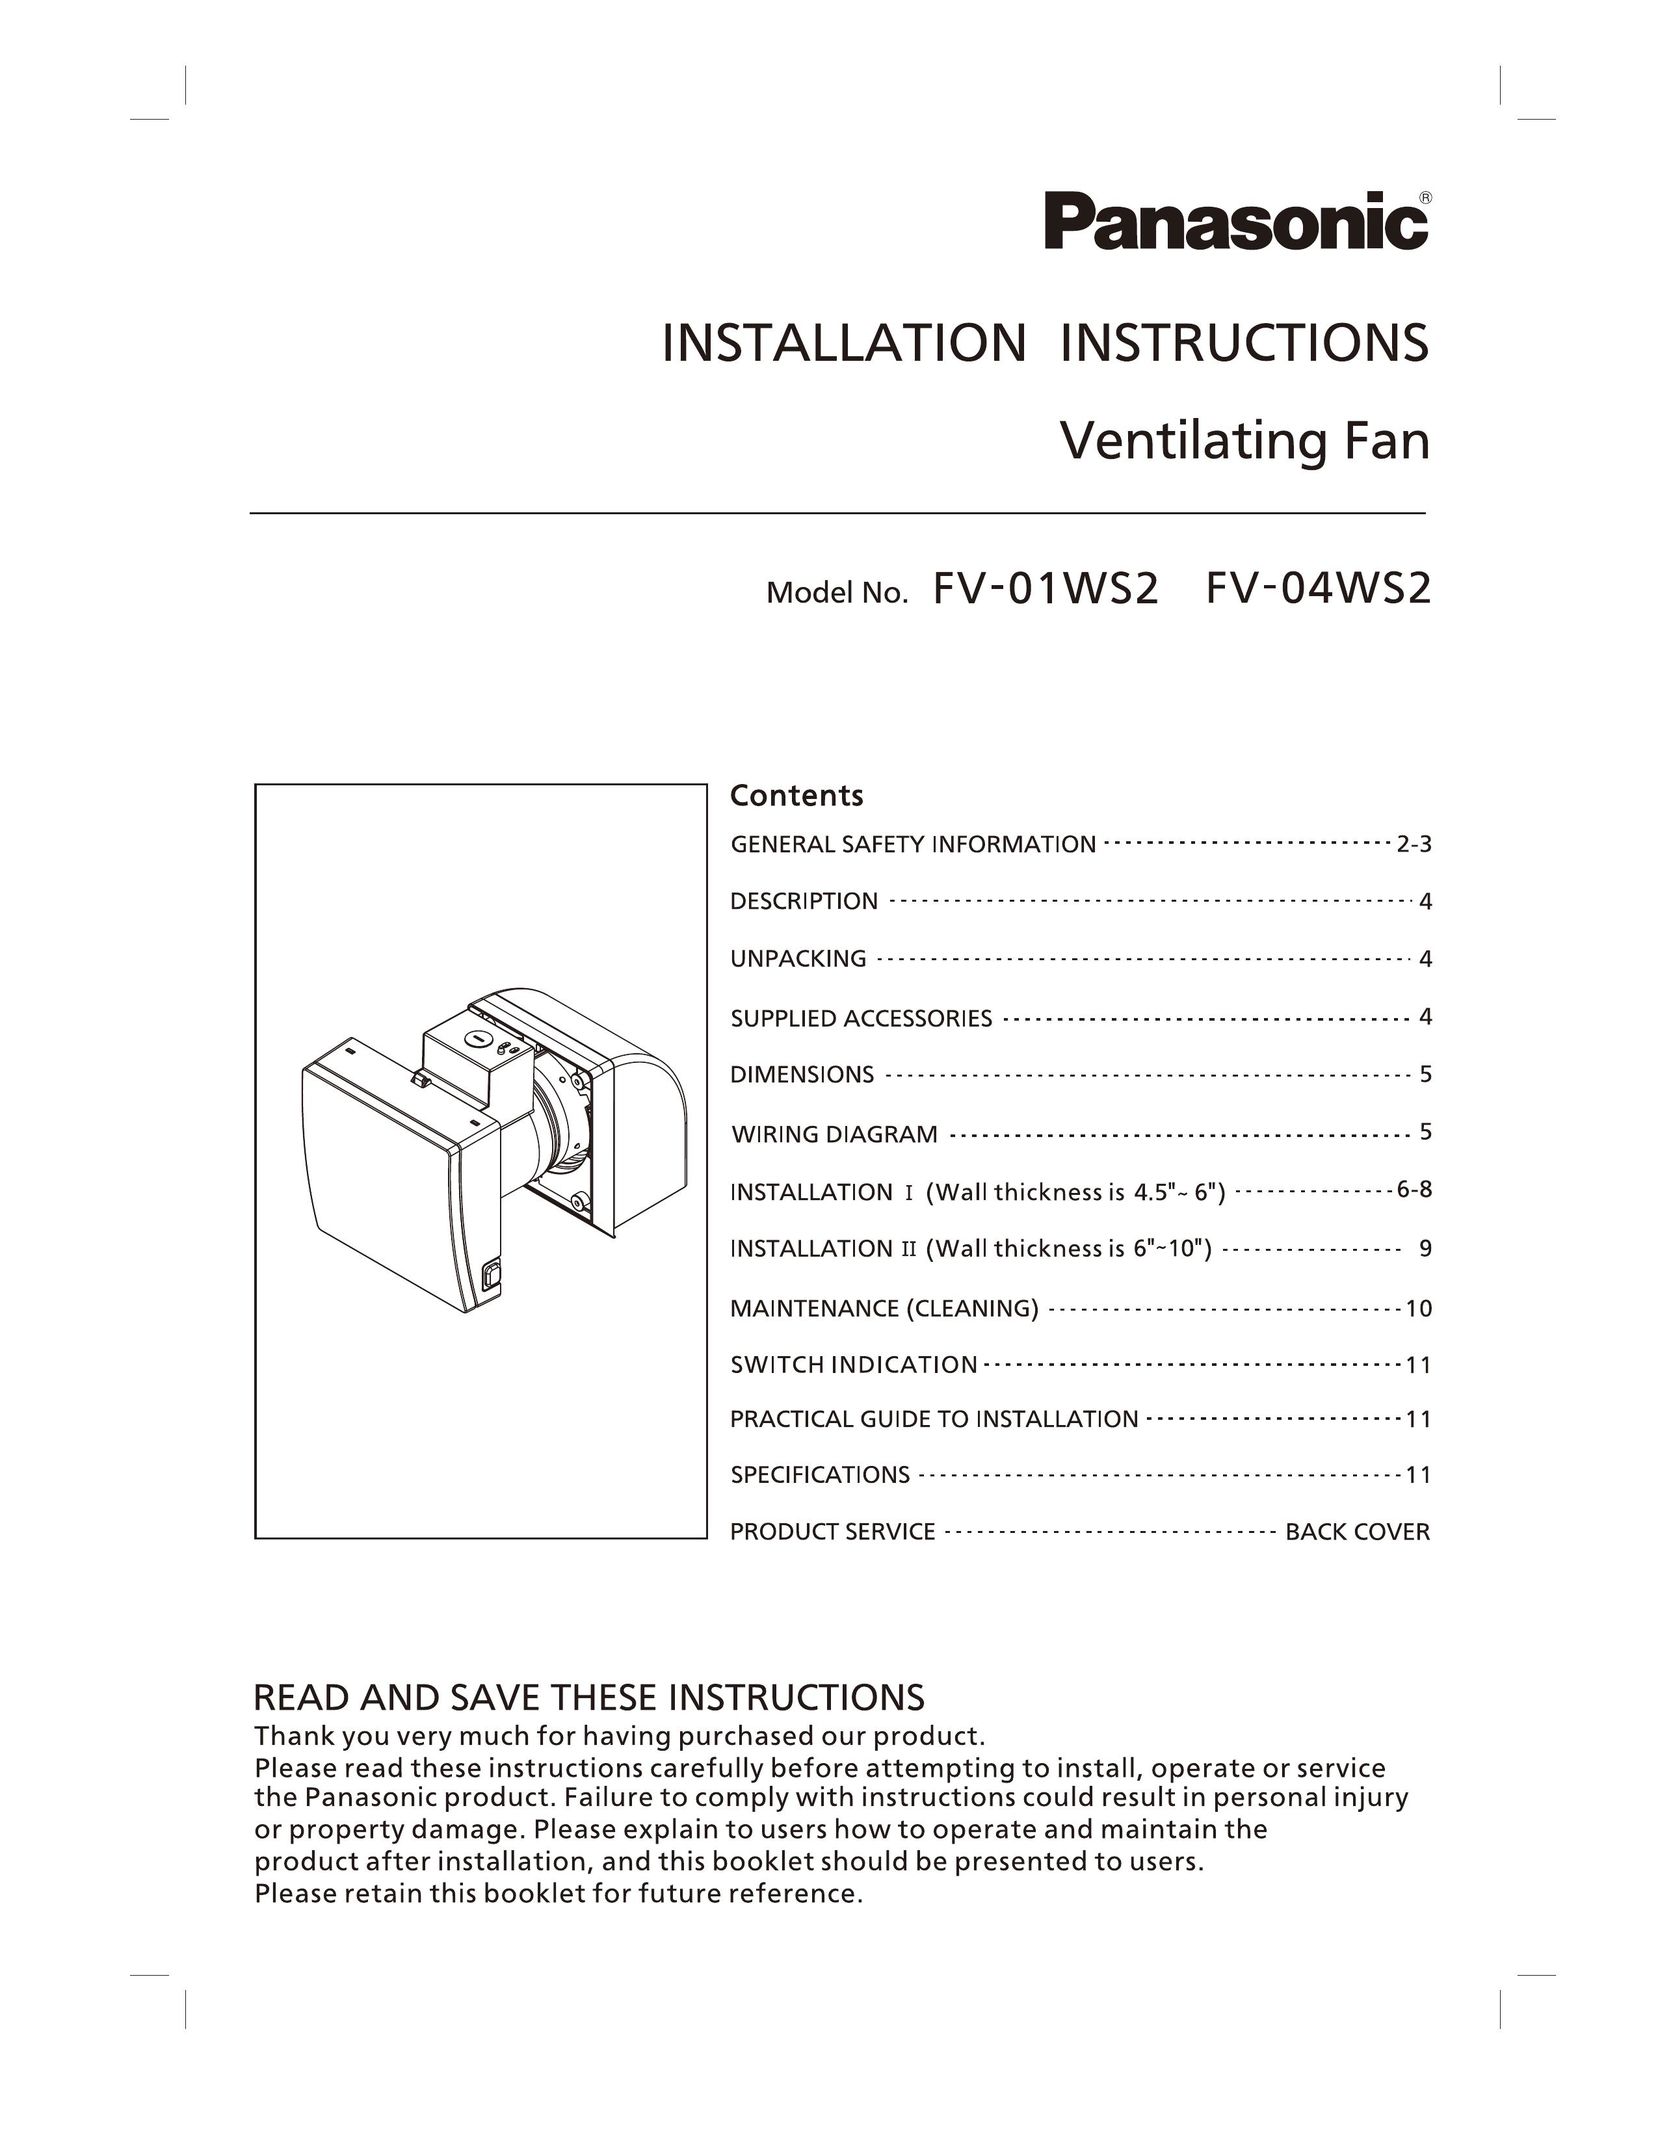 Panasonic FV-04WS2 Dollhouse User Manual